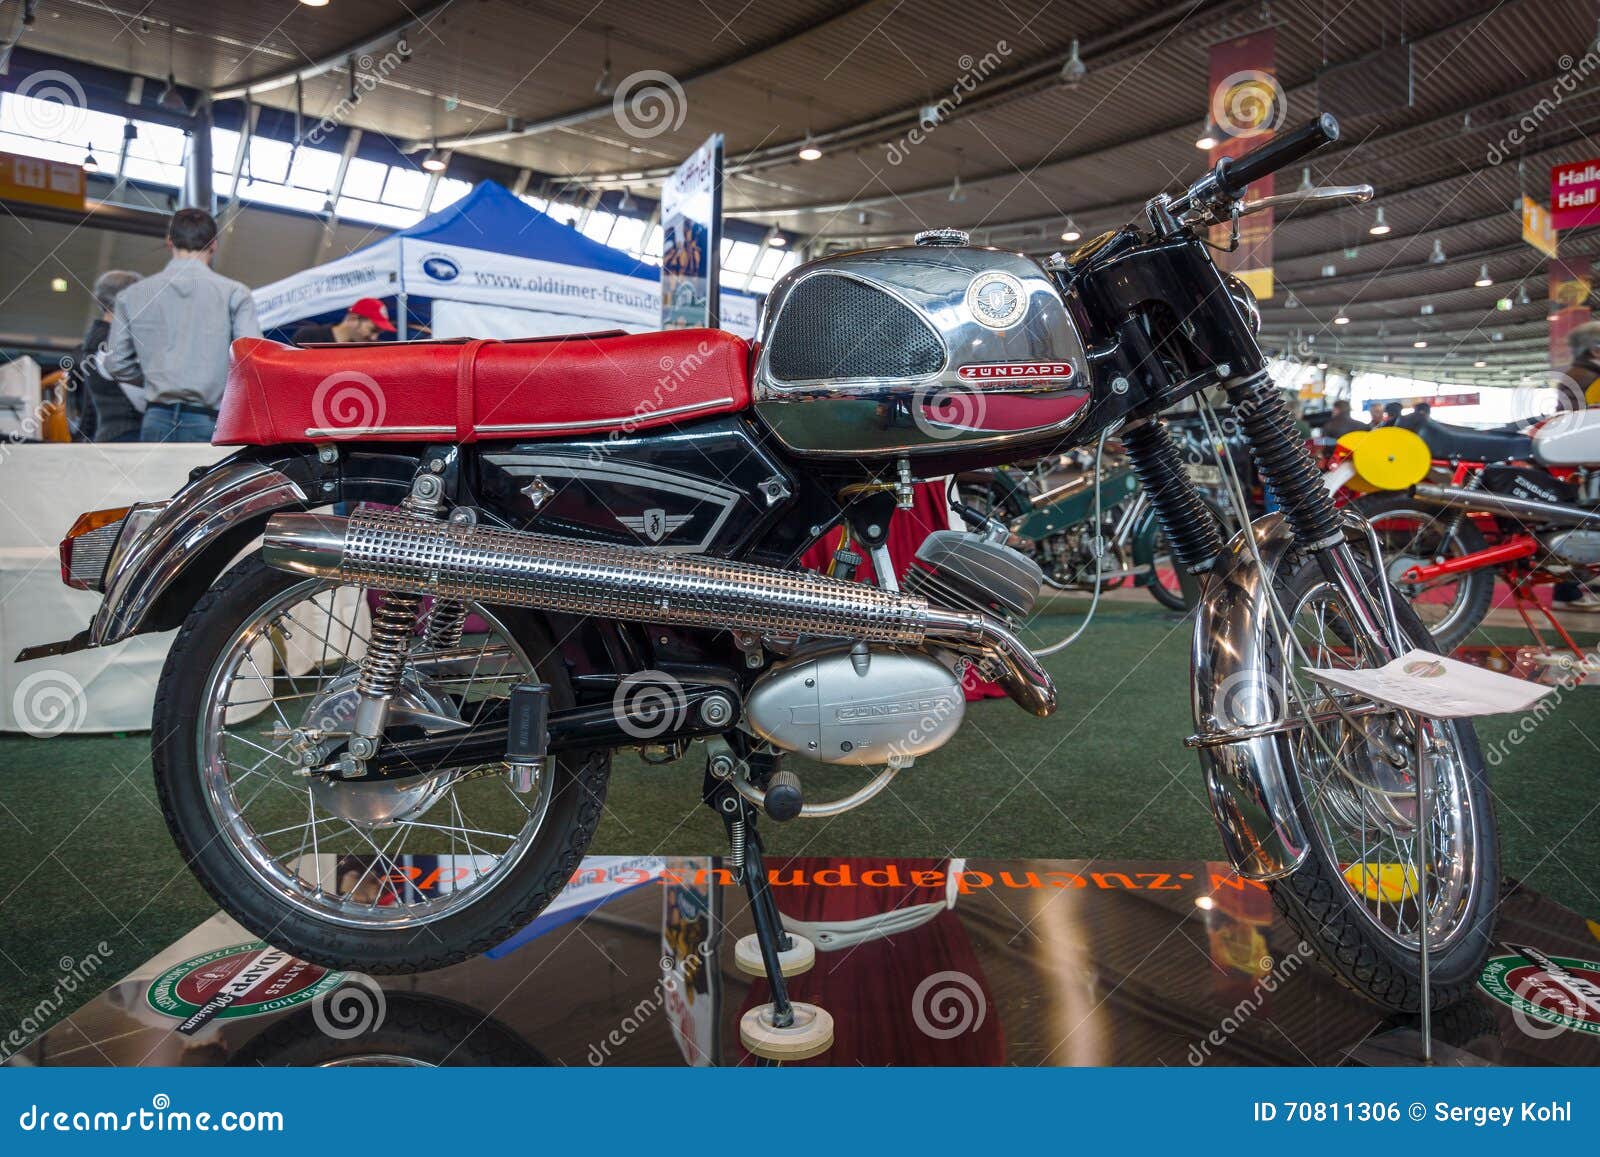 https://thumbs.dreamstime.com/z/motorcycle-zuendapp-ks-super-sport-stuttgart-germany-march-europe-s-greatest-classic-car-exhibition-retro-classics-70811306.jpg